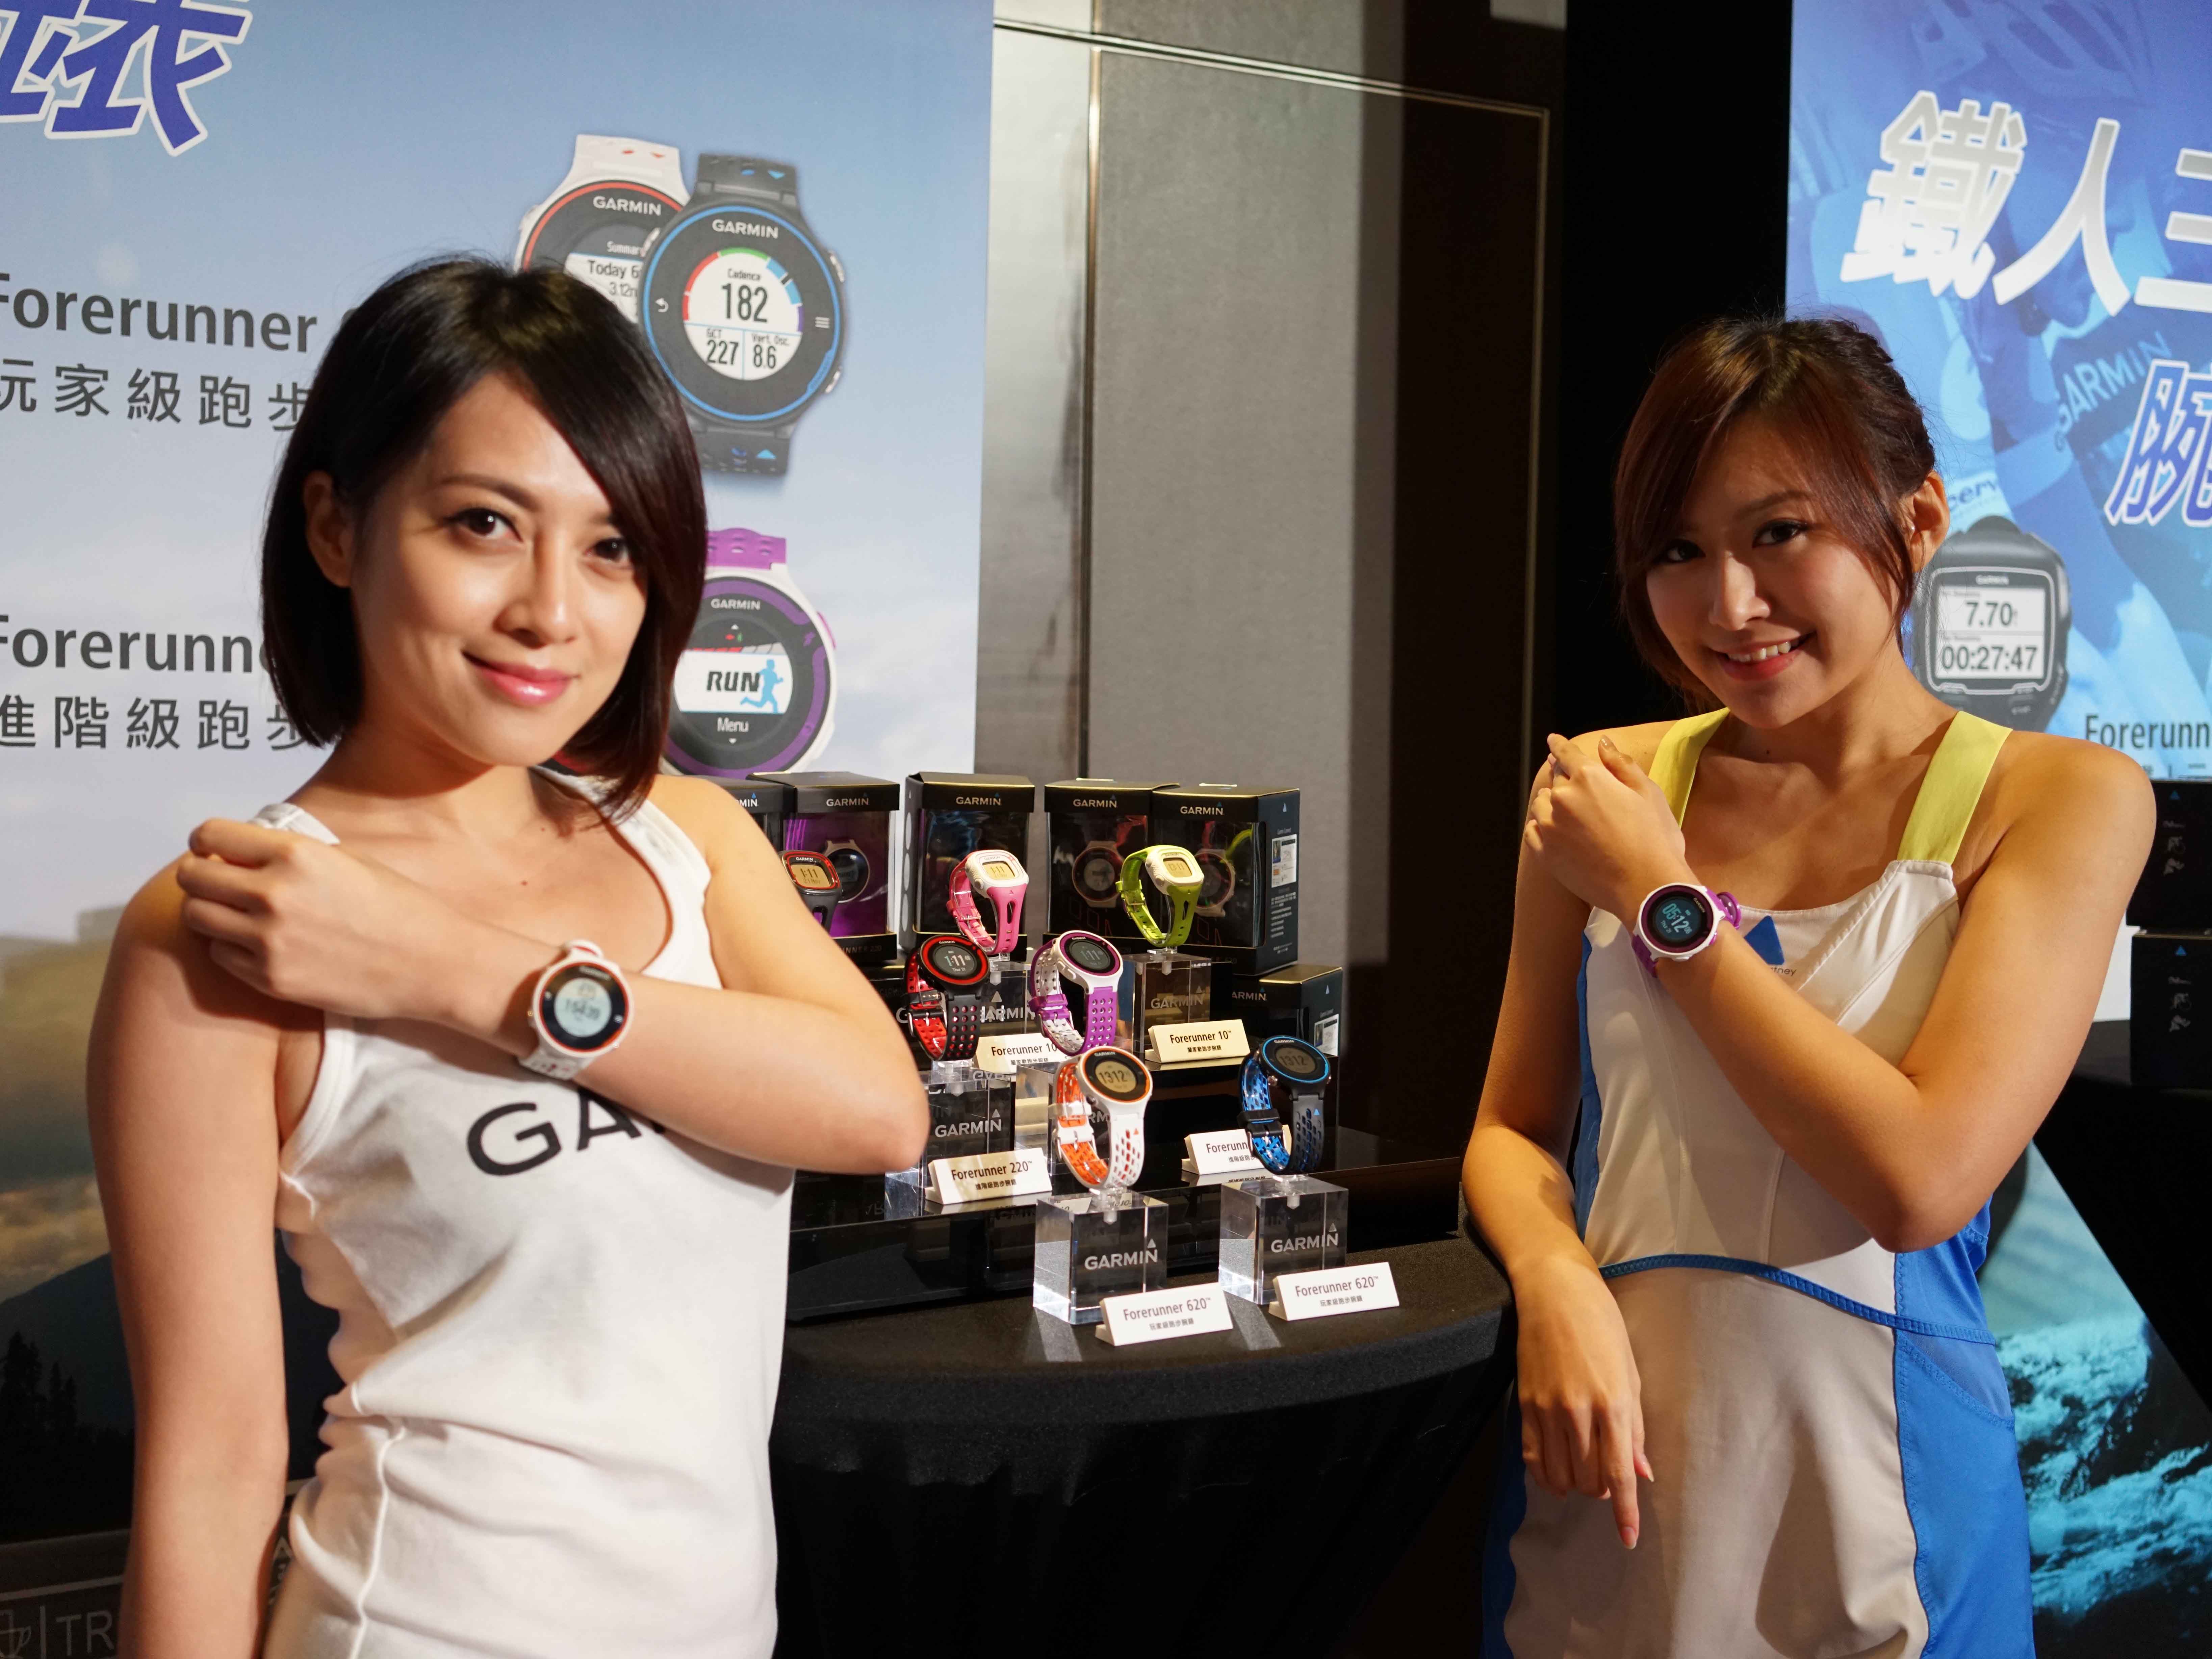 Garmin 發表1600萬畫素運動攝影機 Viber Elite，同步推出專業運動手錶